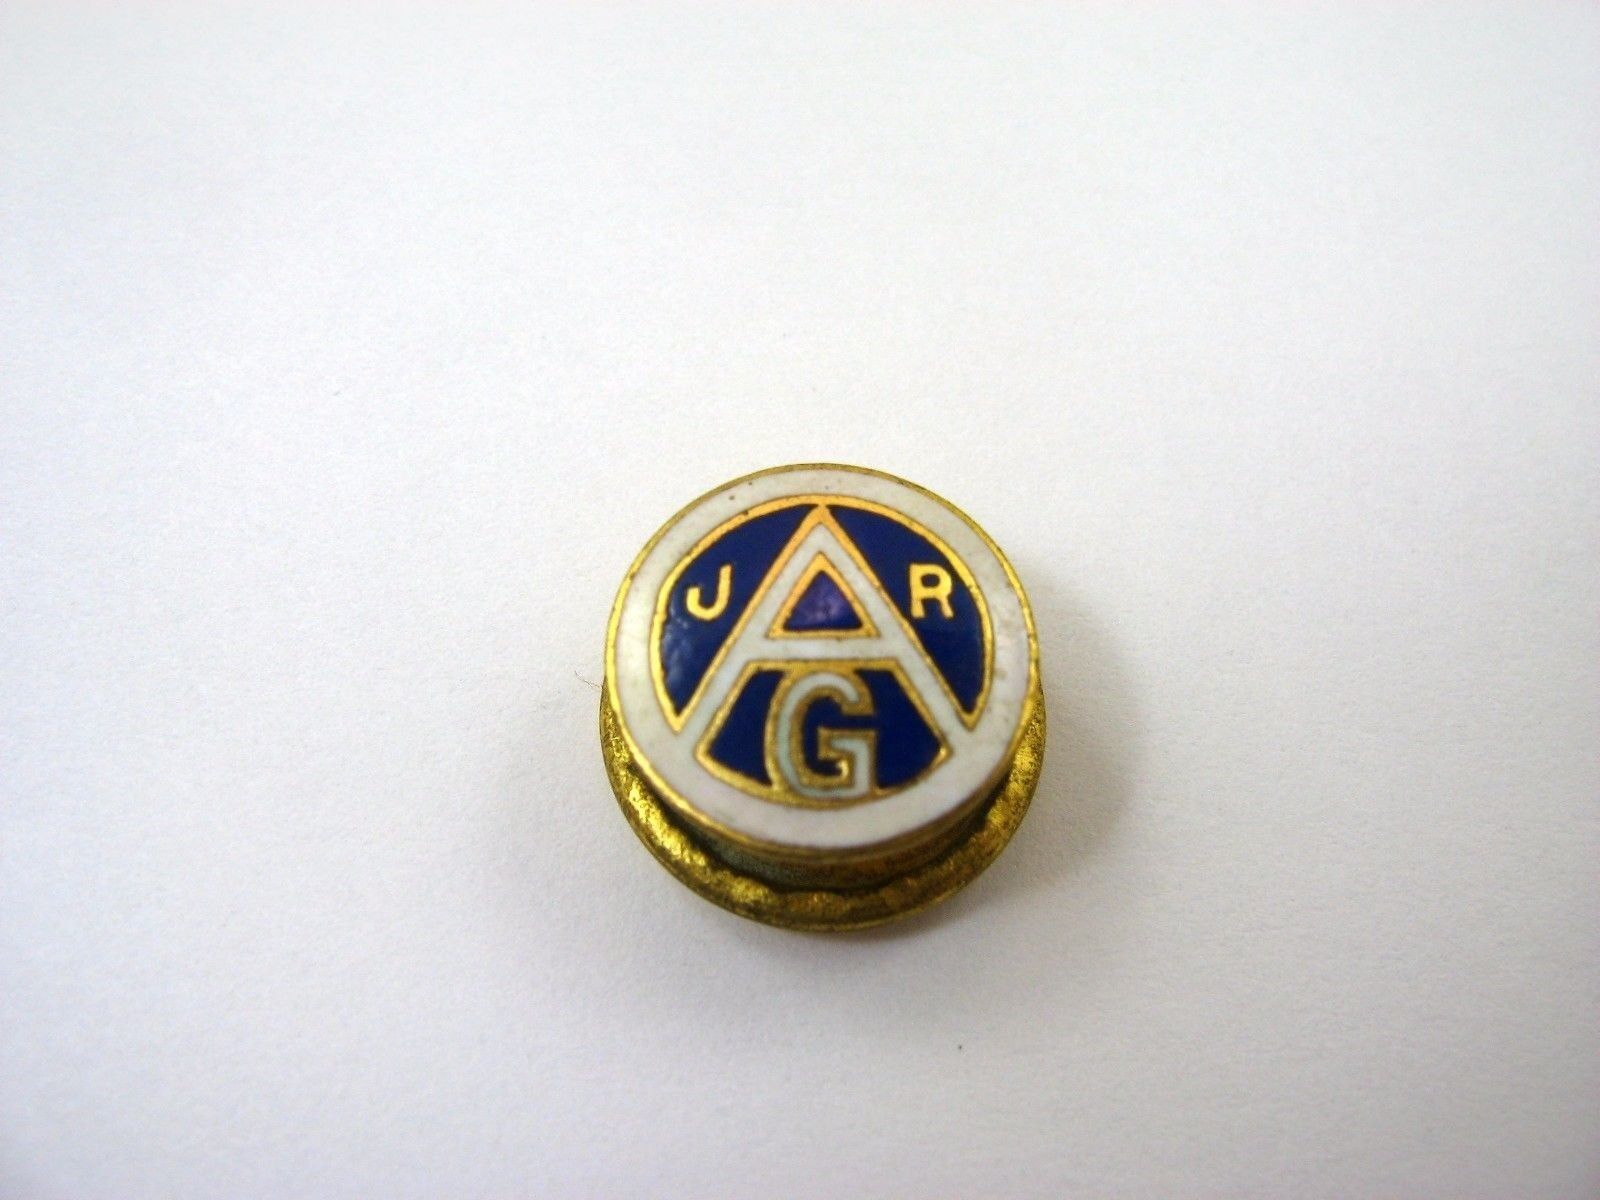 Antique Vintage Collectible Pin: JRAG AGJR Enamel Screwback